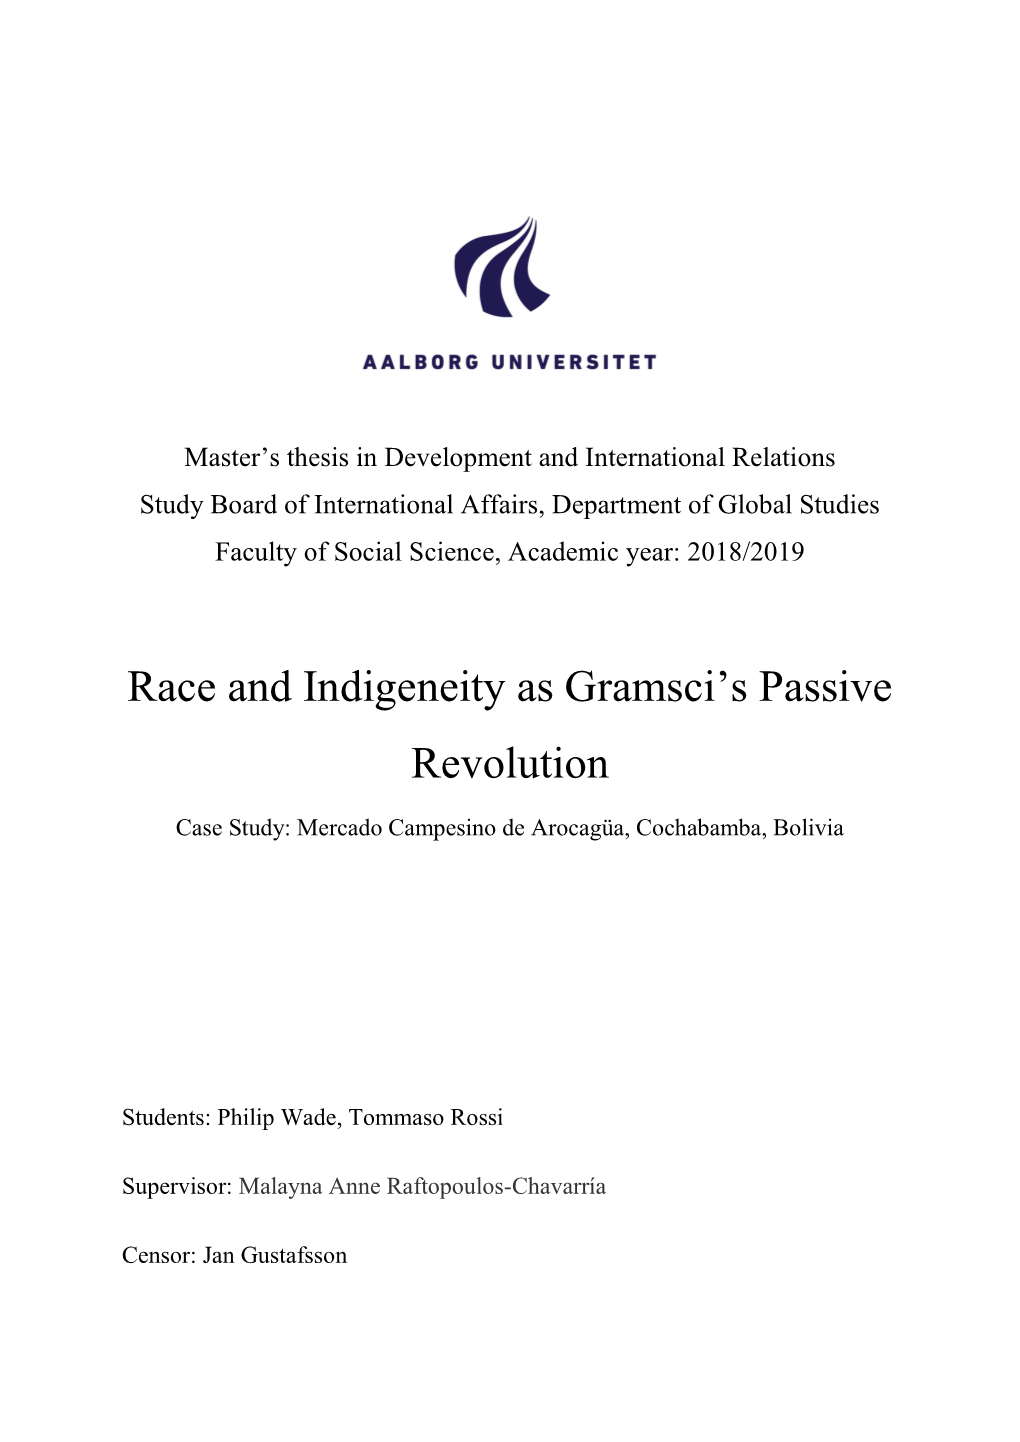 Race and Indigeneity As Gramsci's Passive Revolution